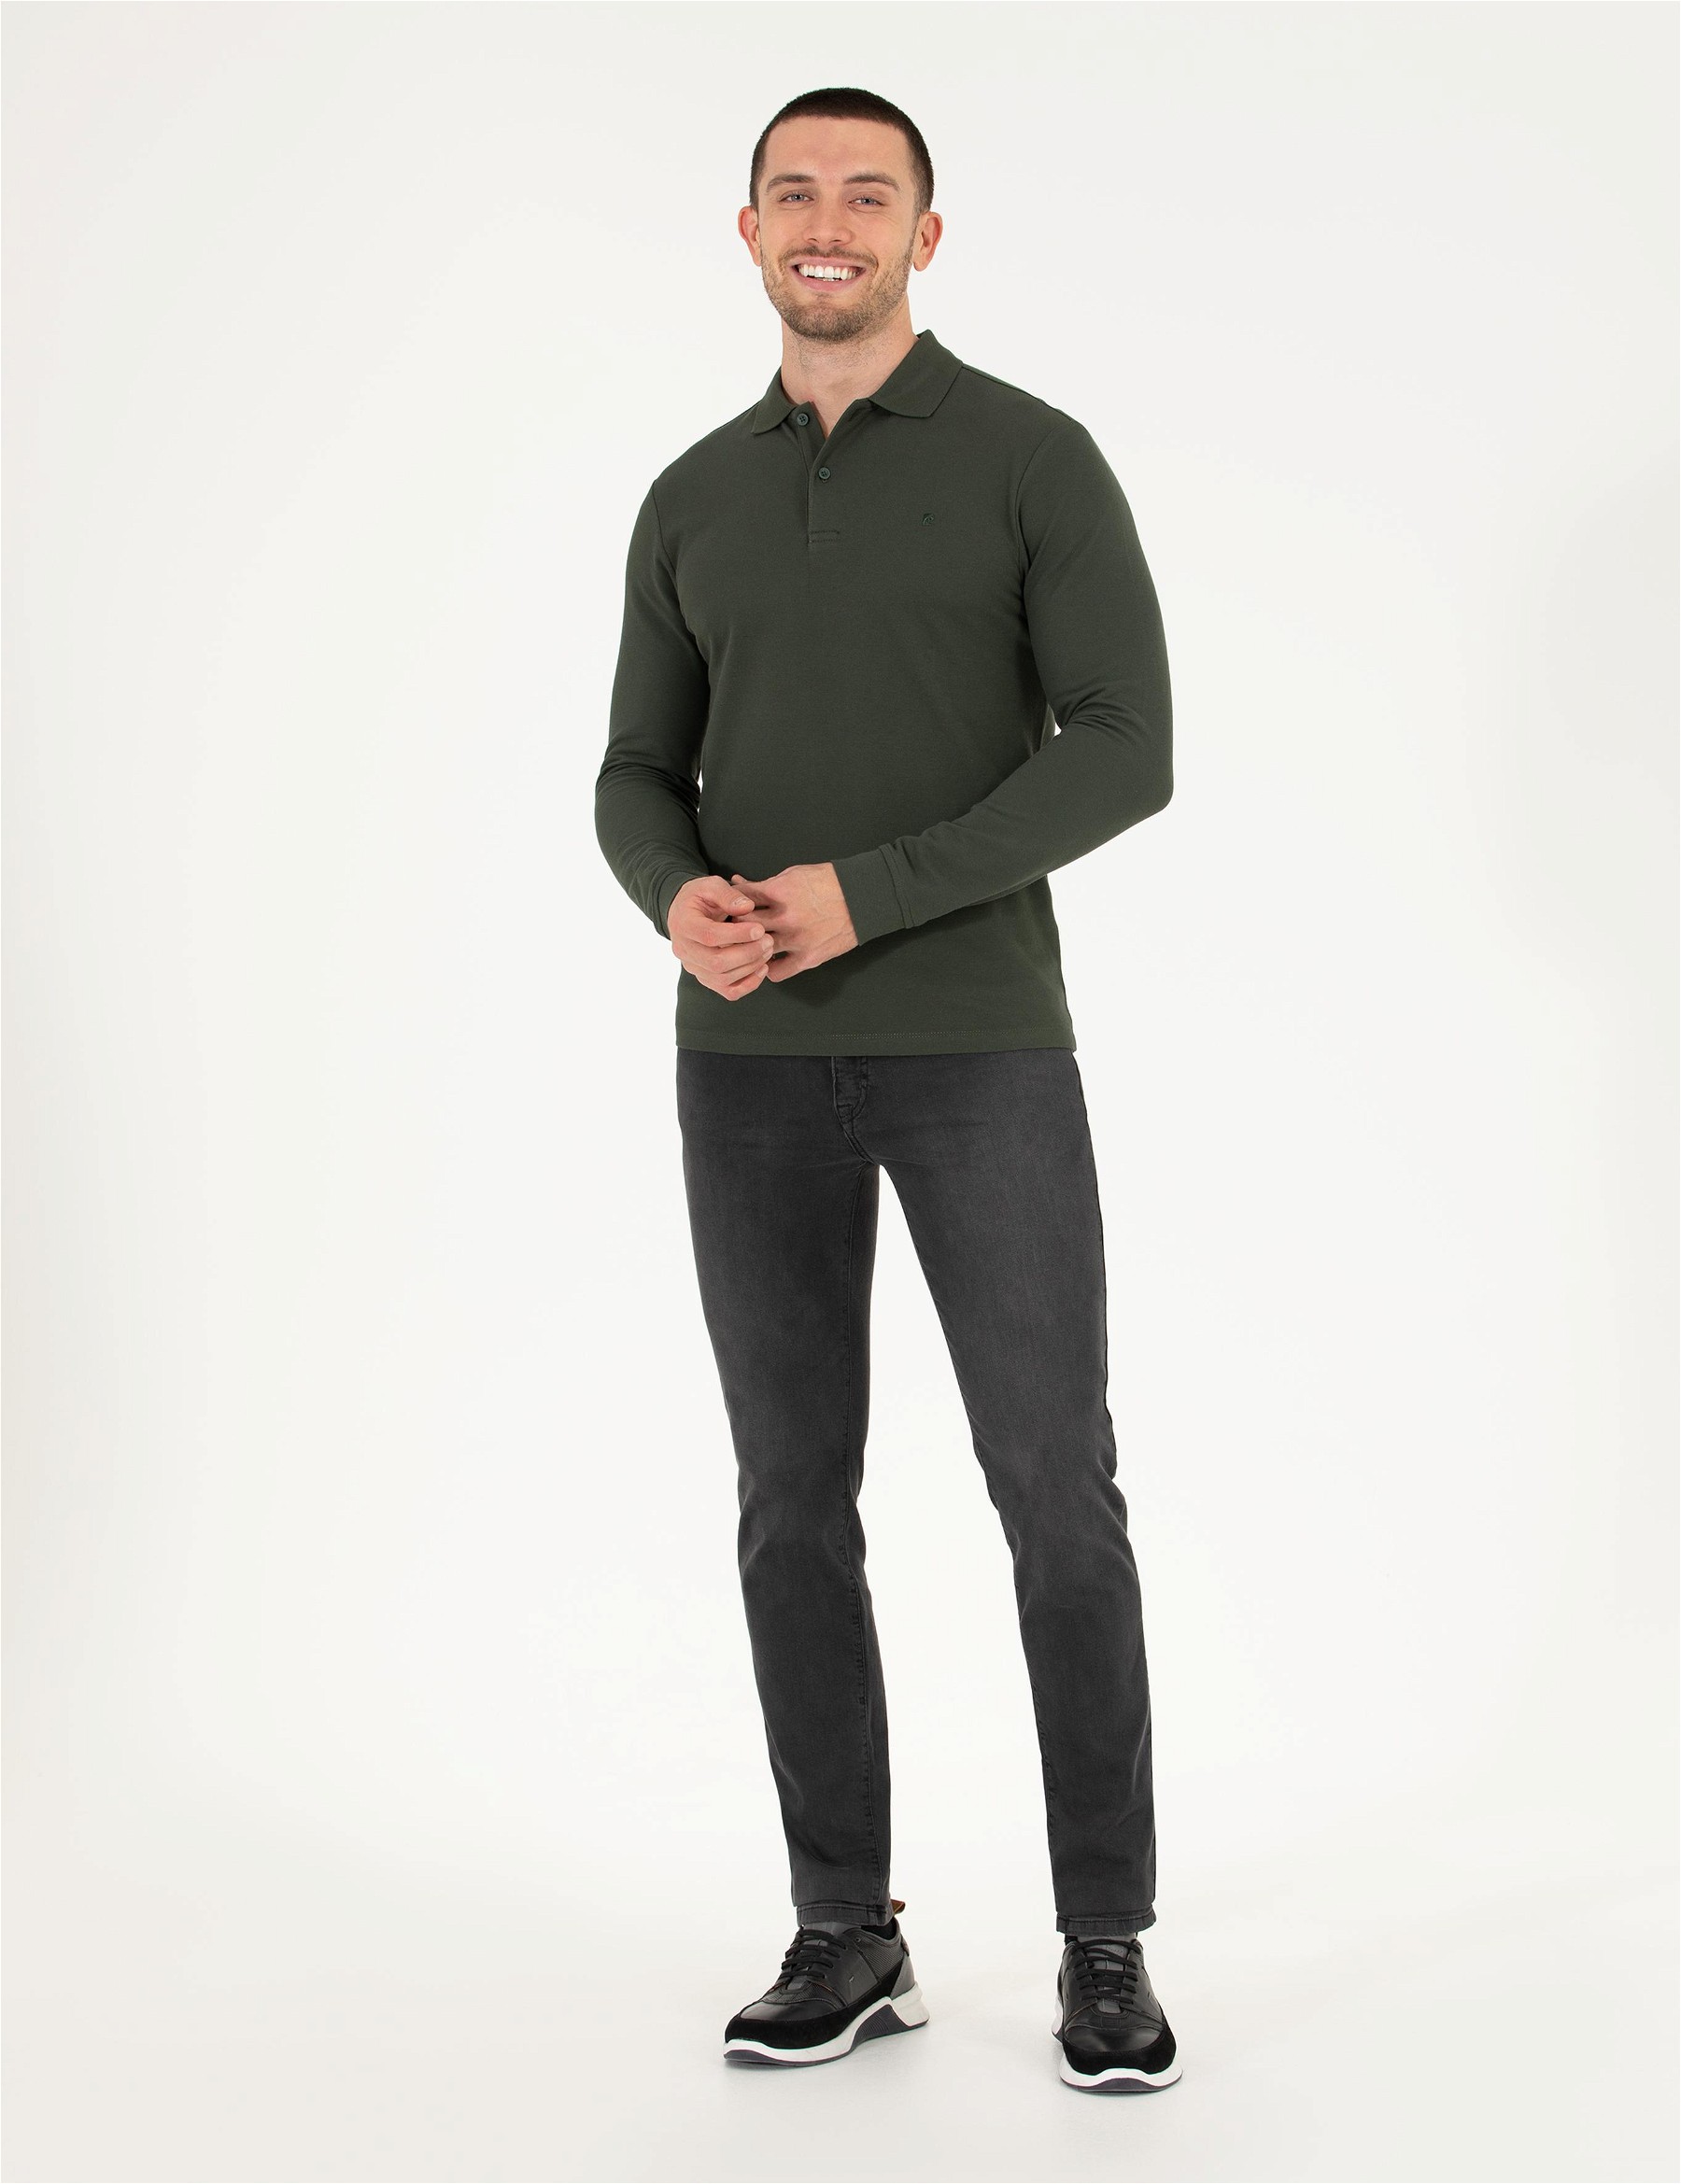 Koyu Yeşil Slim Fit Basic Sweatshirt